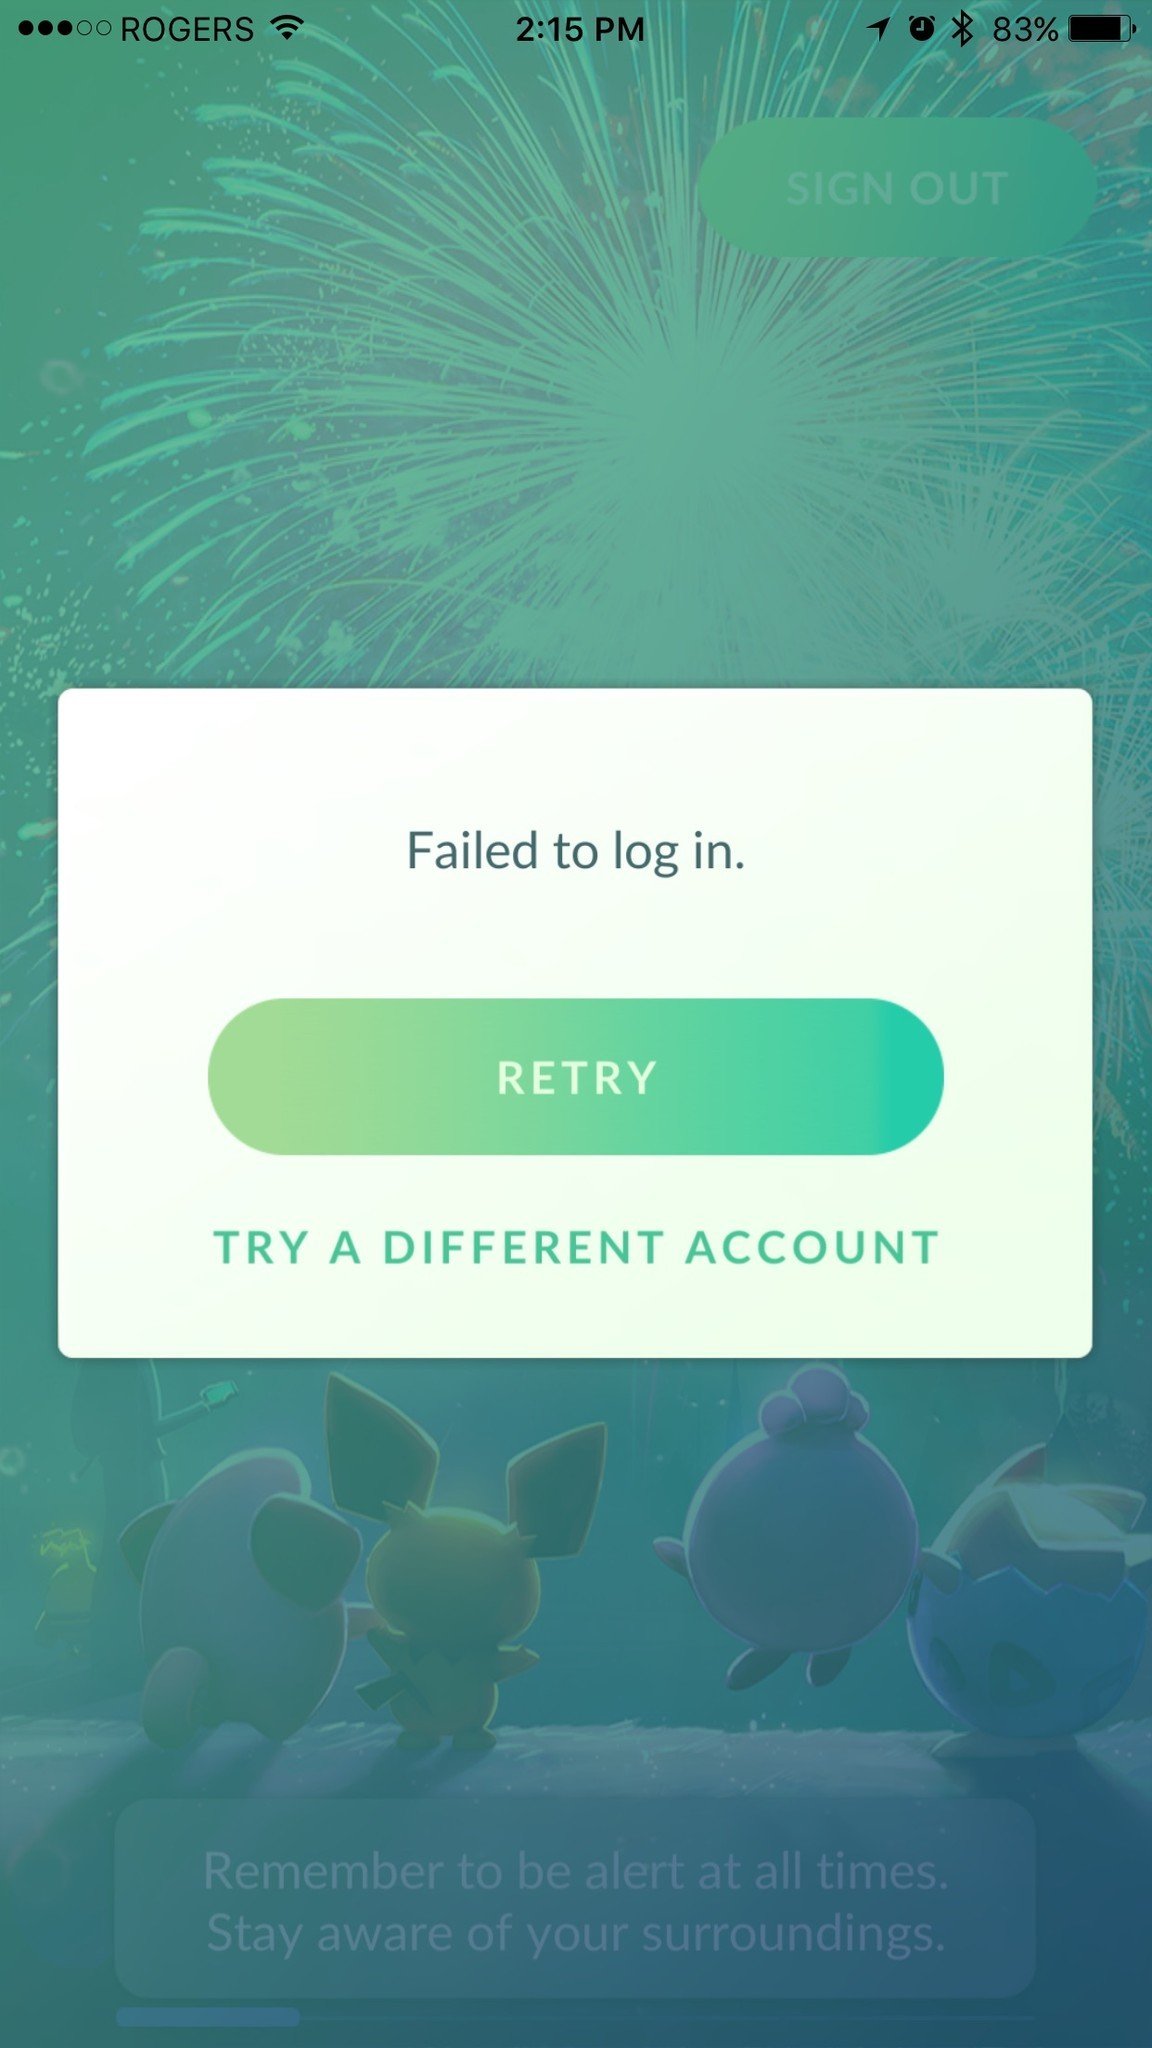 Pokémon Go servers down! Here